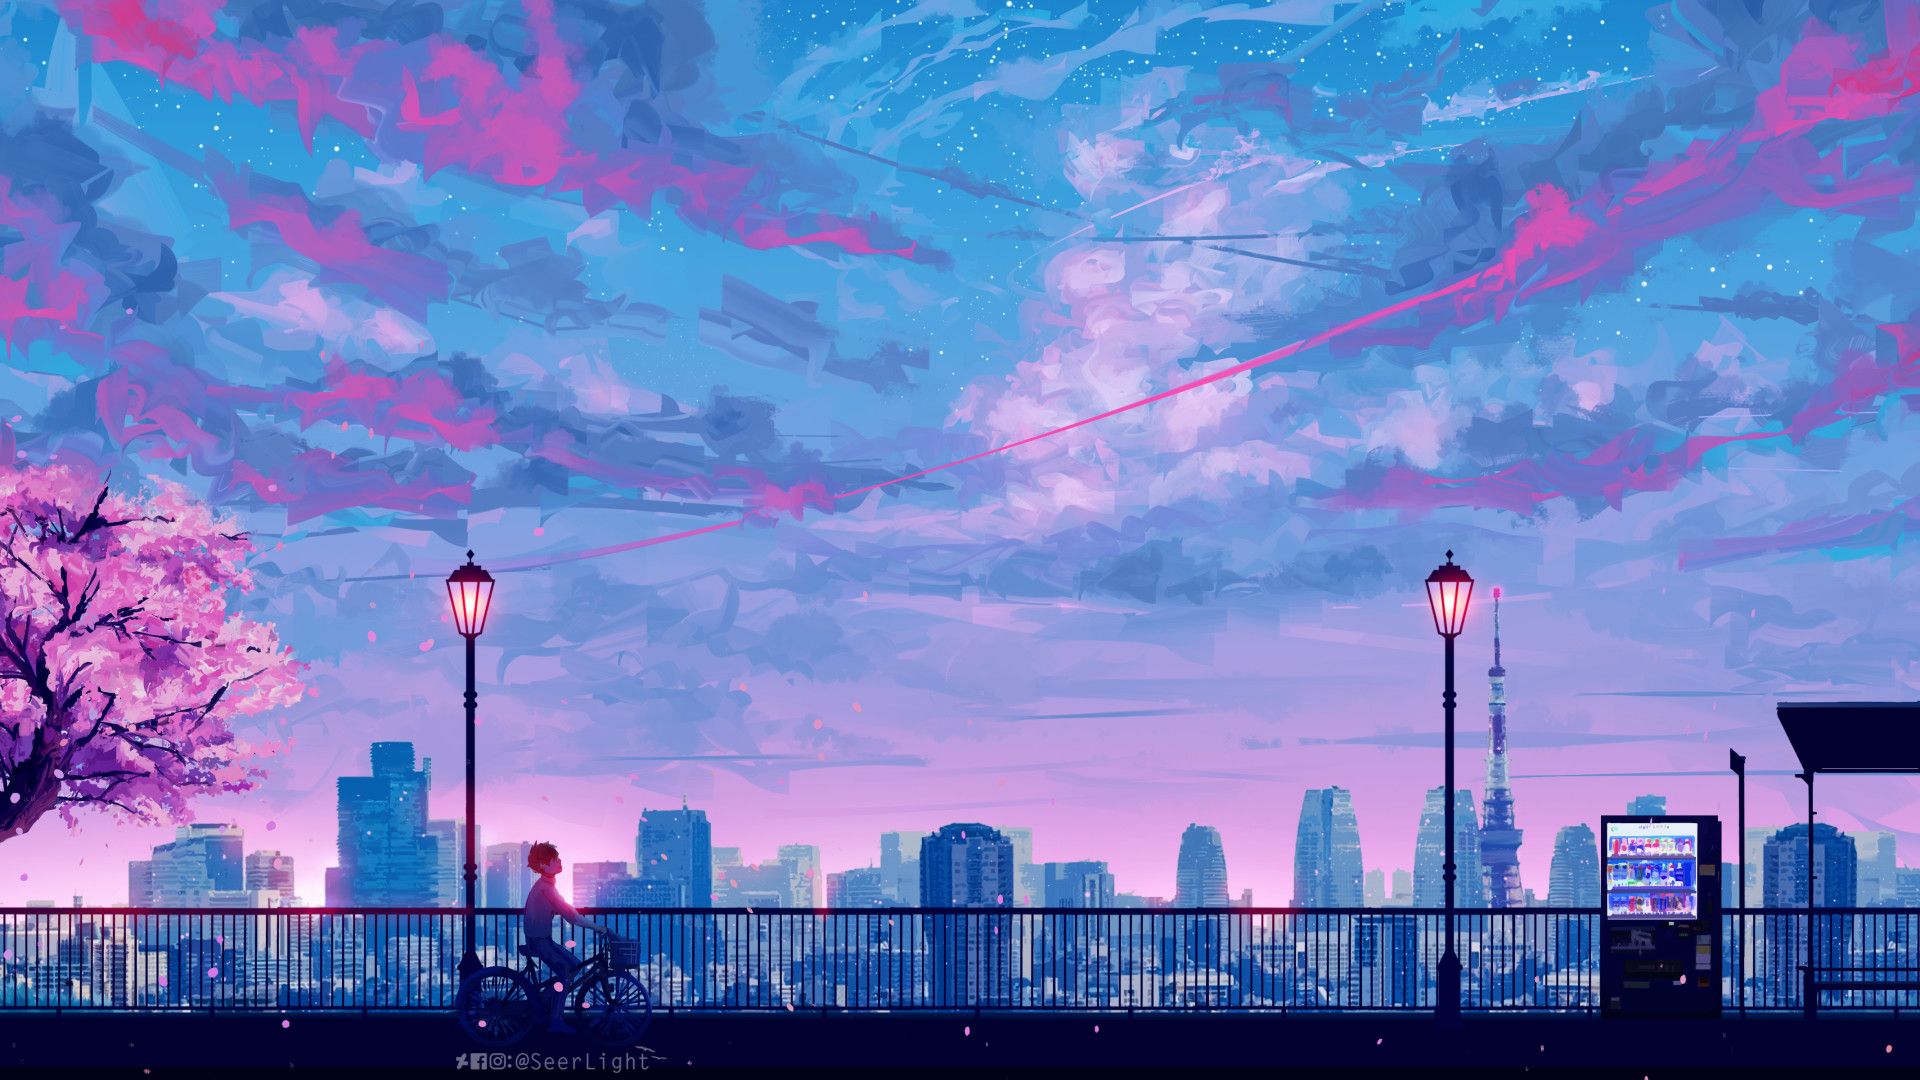 Anime Cityscape Landscape Scenery 5k Laptop Full HD